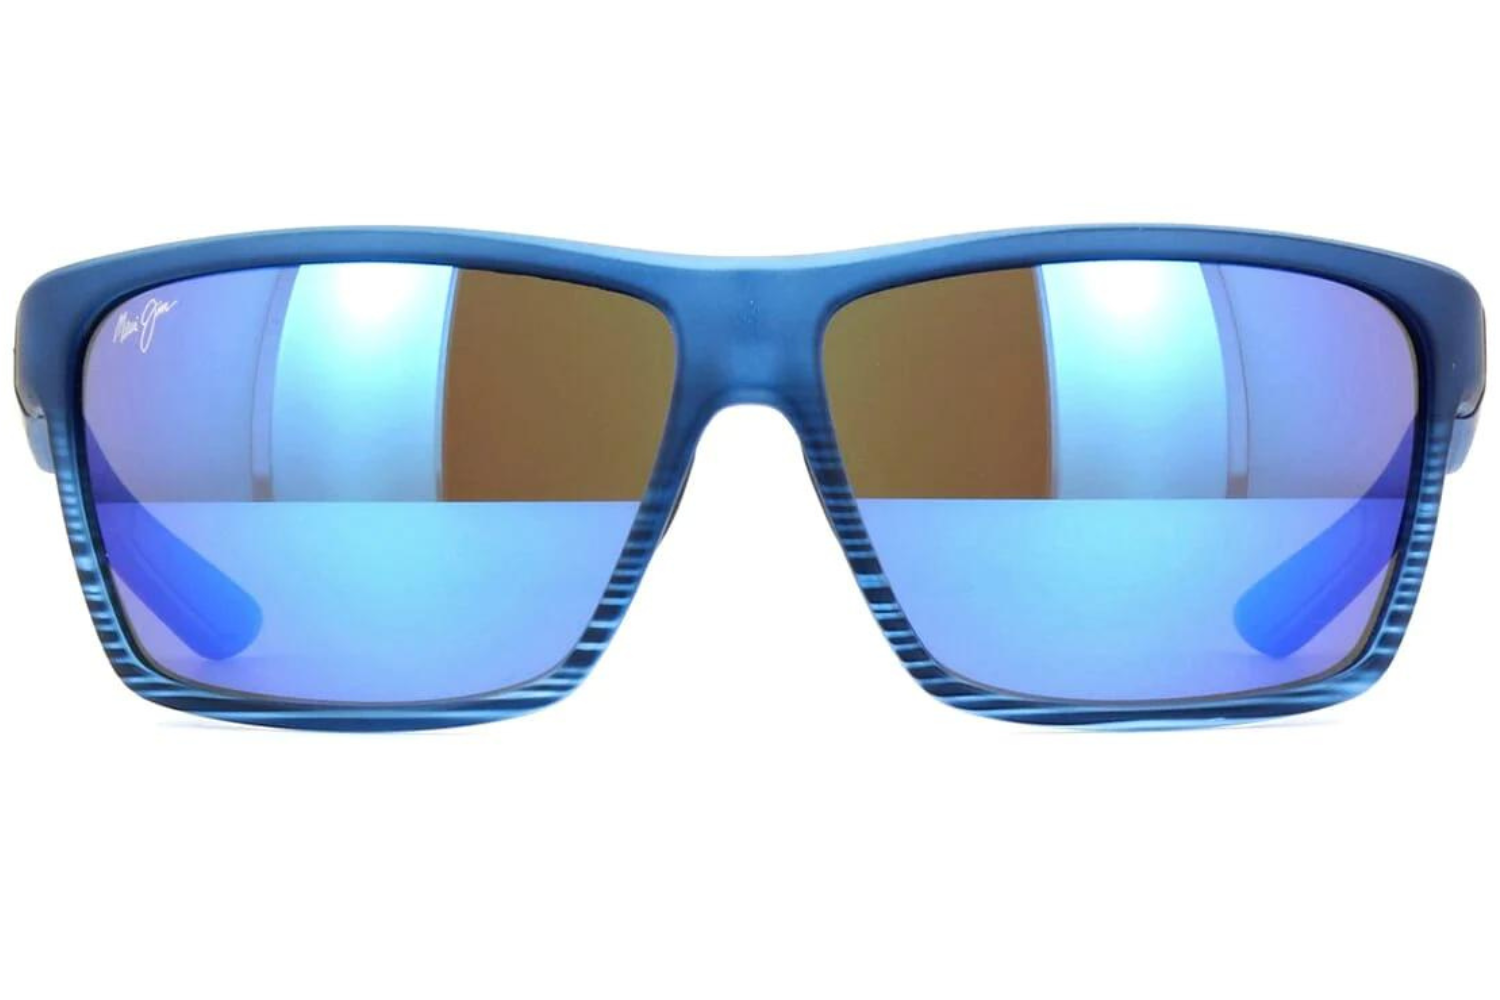 Maui Jim Lotus 827 Sunglasses: Models RS827-13F, HS827-01, GS827-02J -  Flight Sunglasses